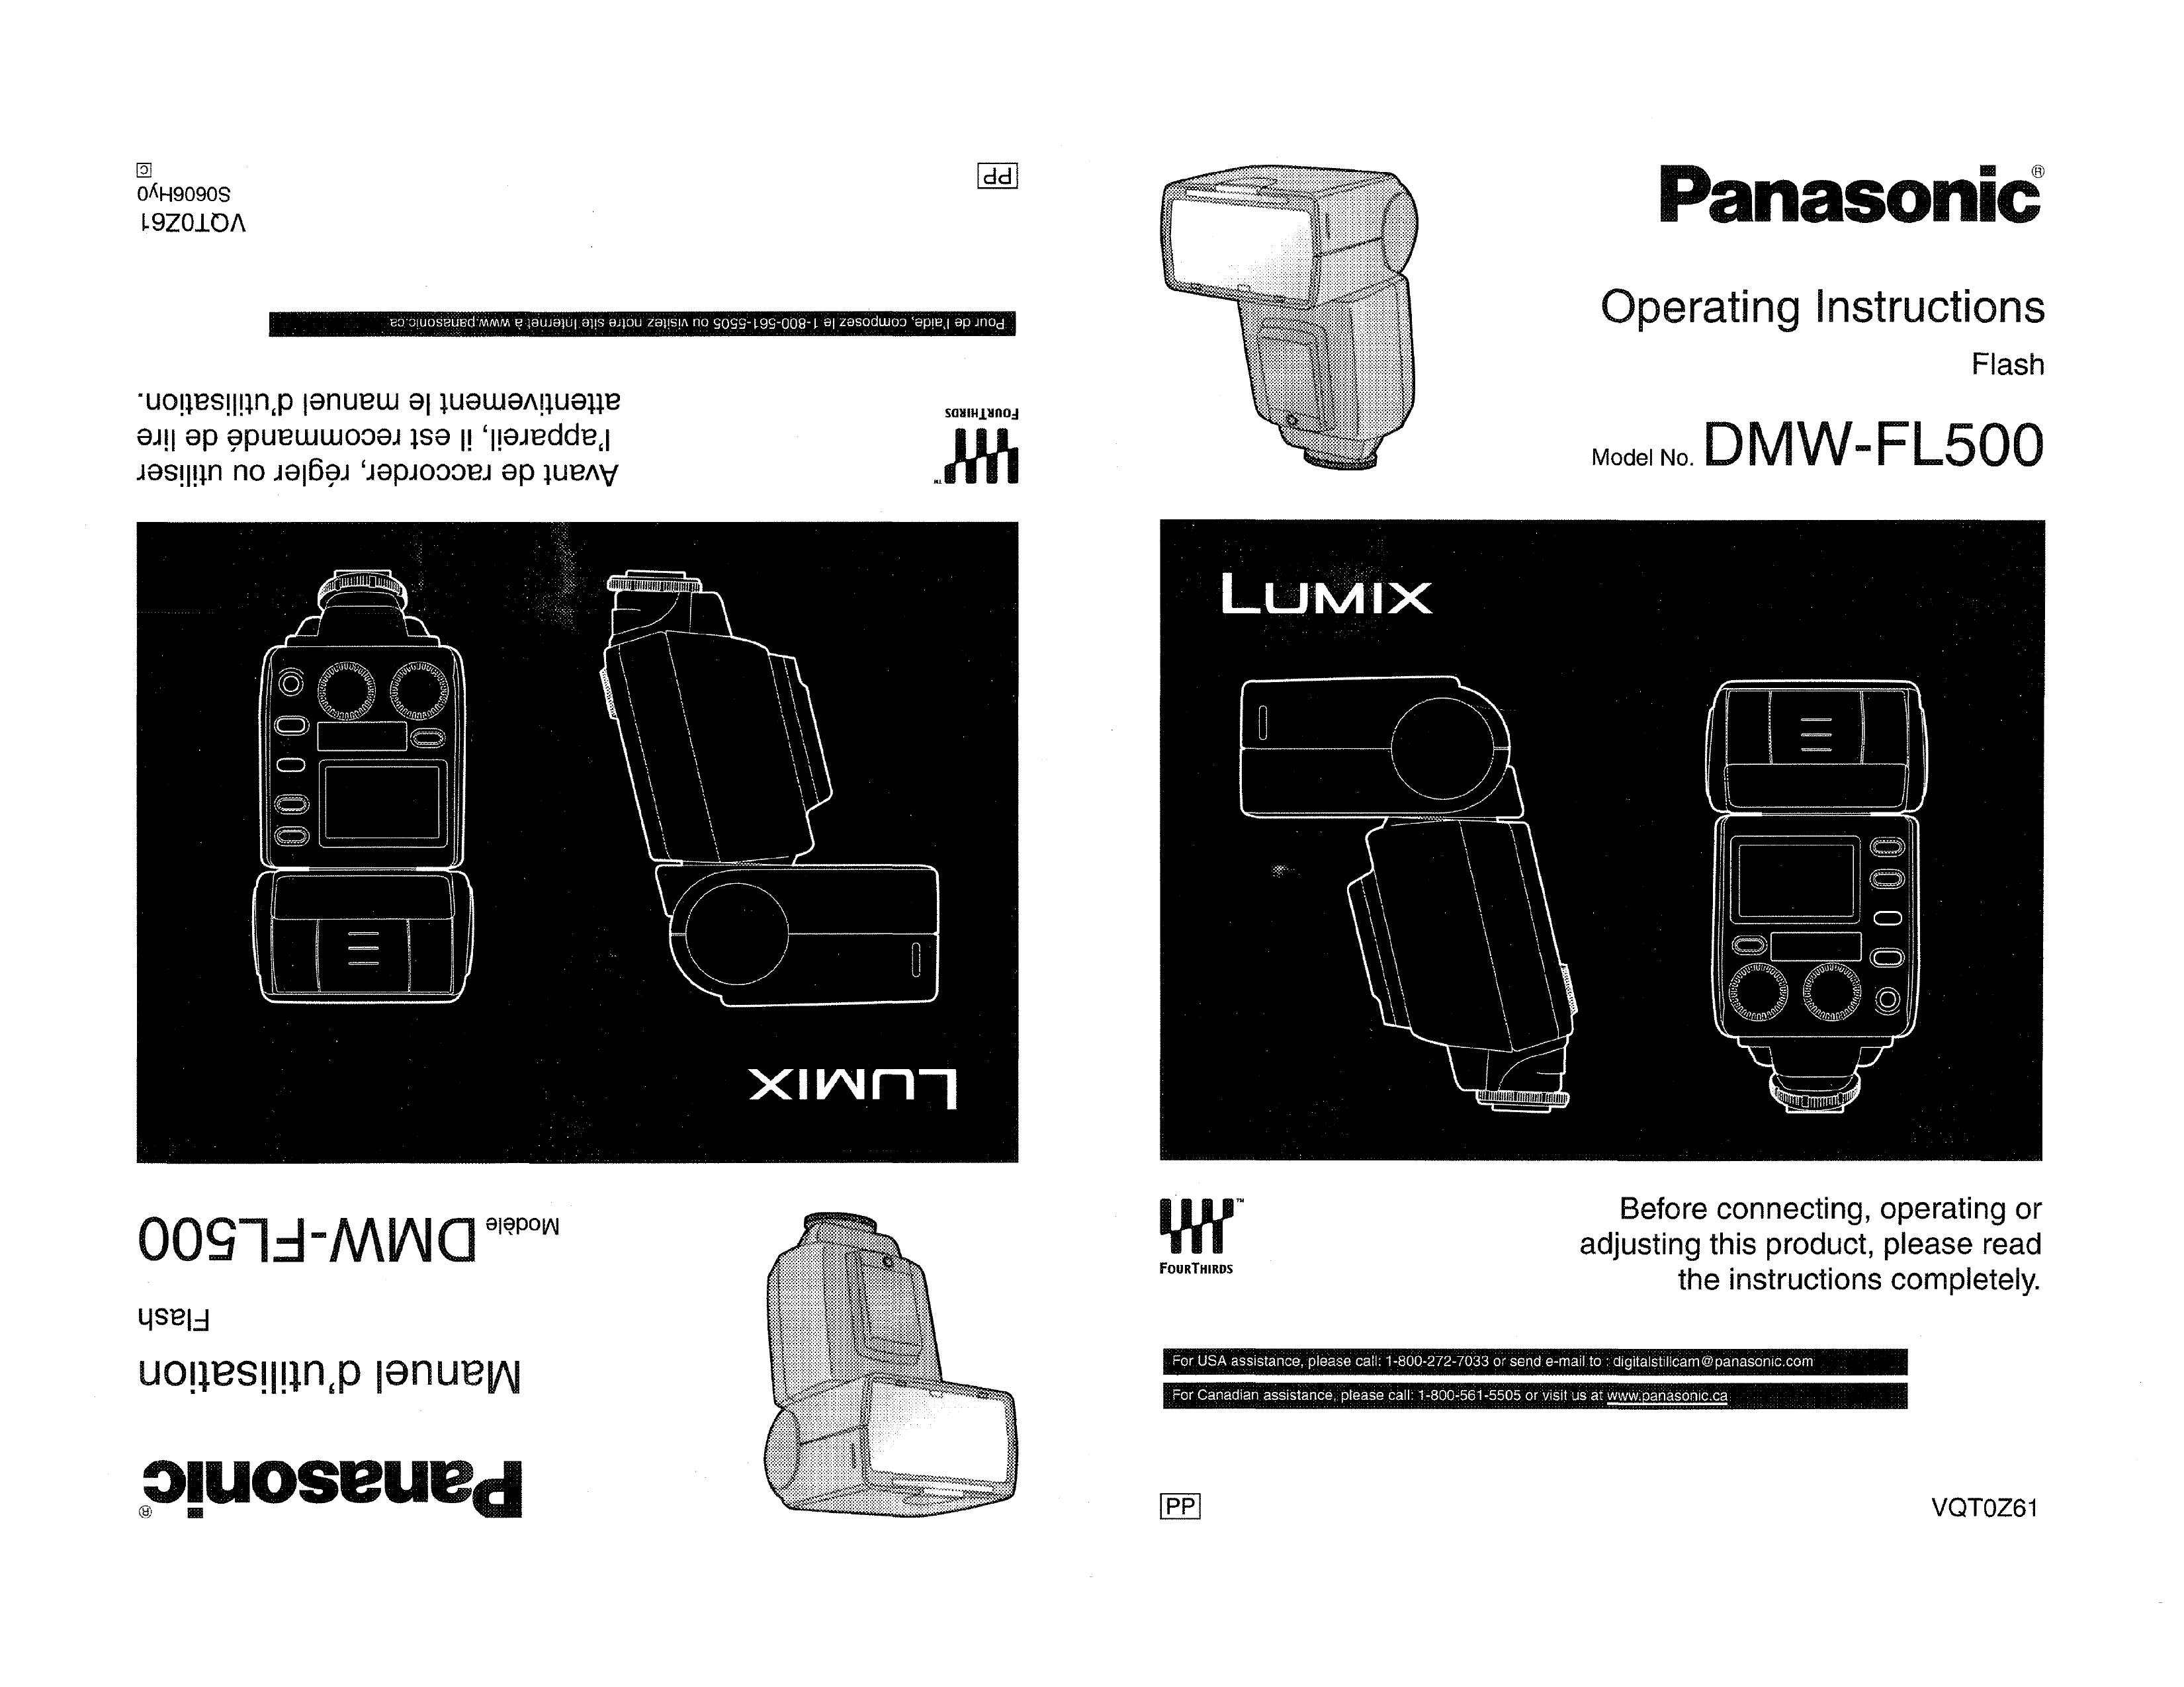 Panasonic DMW-FL500 Camera Flash User Manual